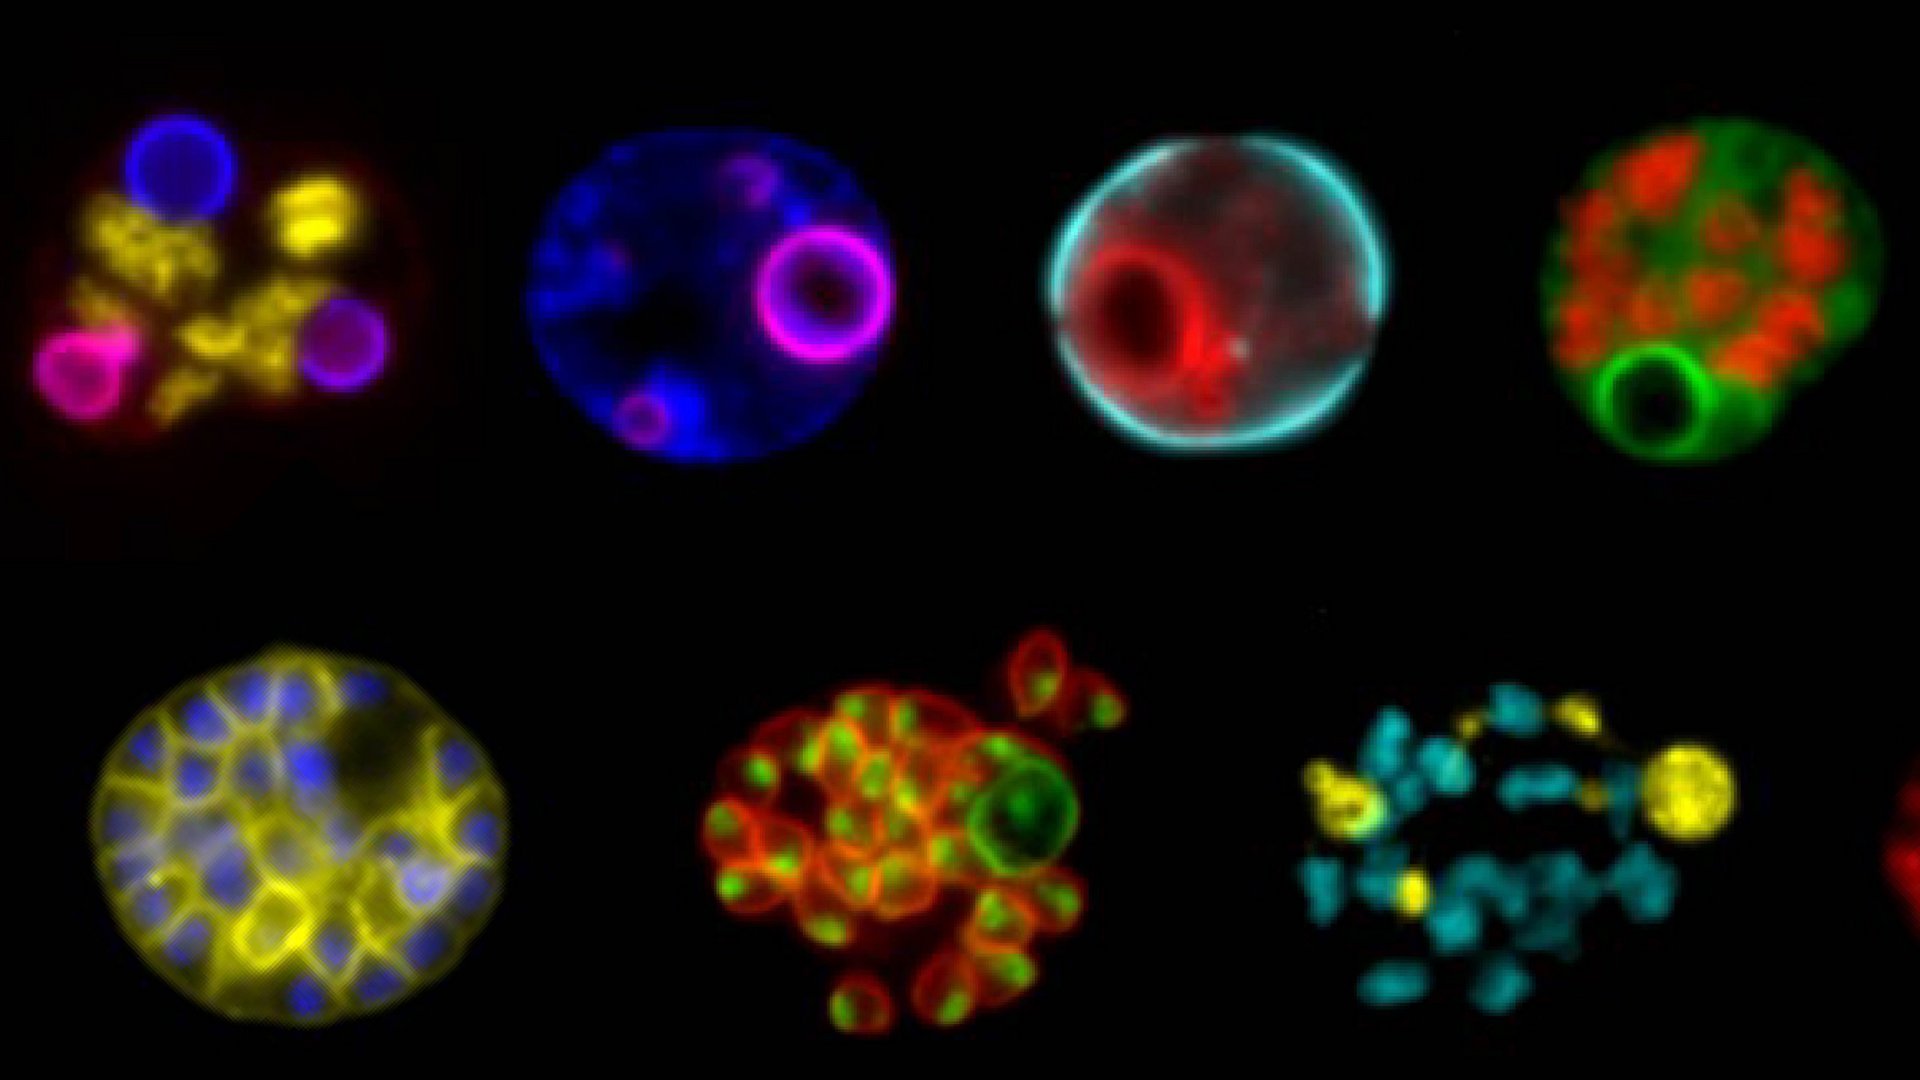 Transgenic Plasmodium falciparum parasites expressing fluorescently tagged proteins